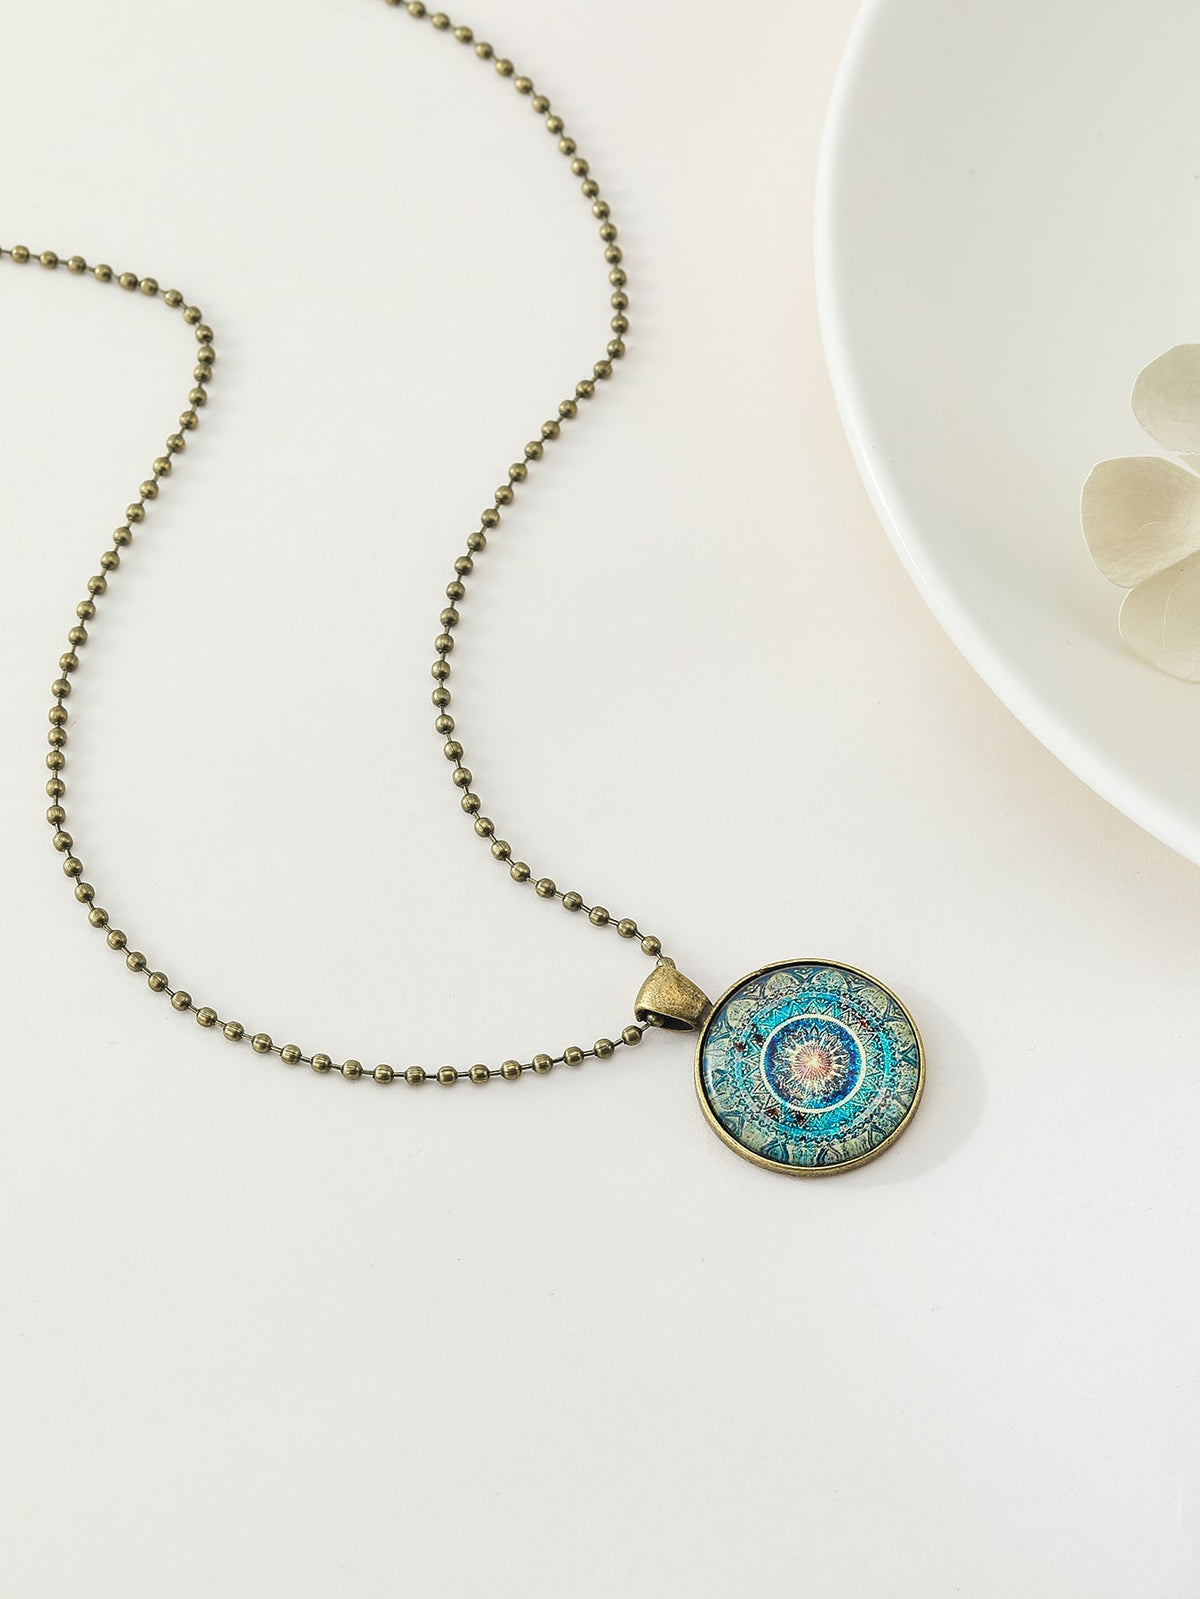 Vintage Charm Necklace - 